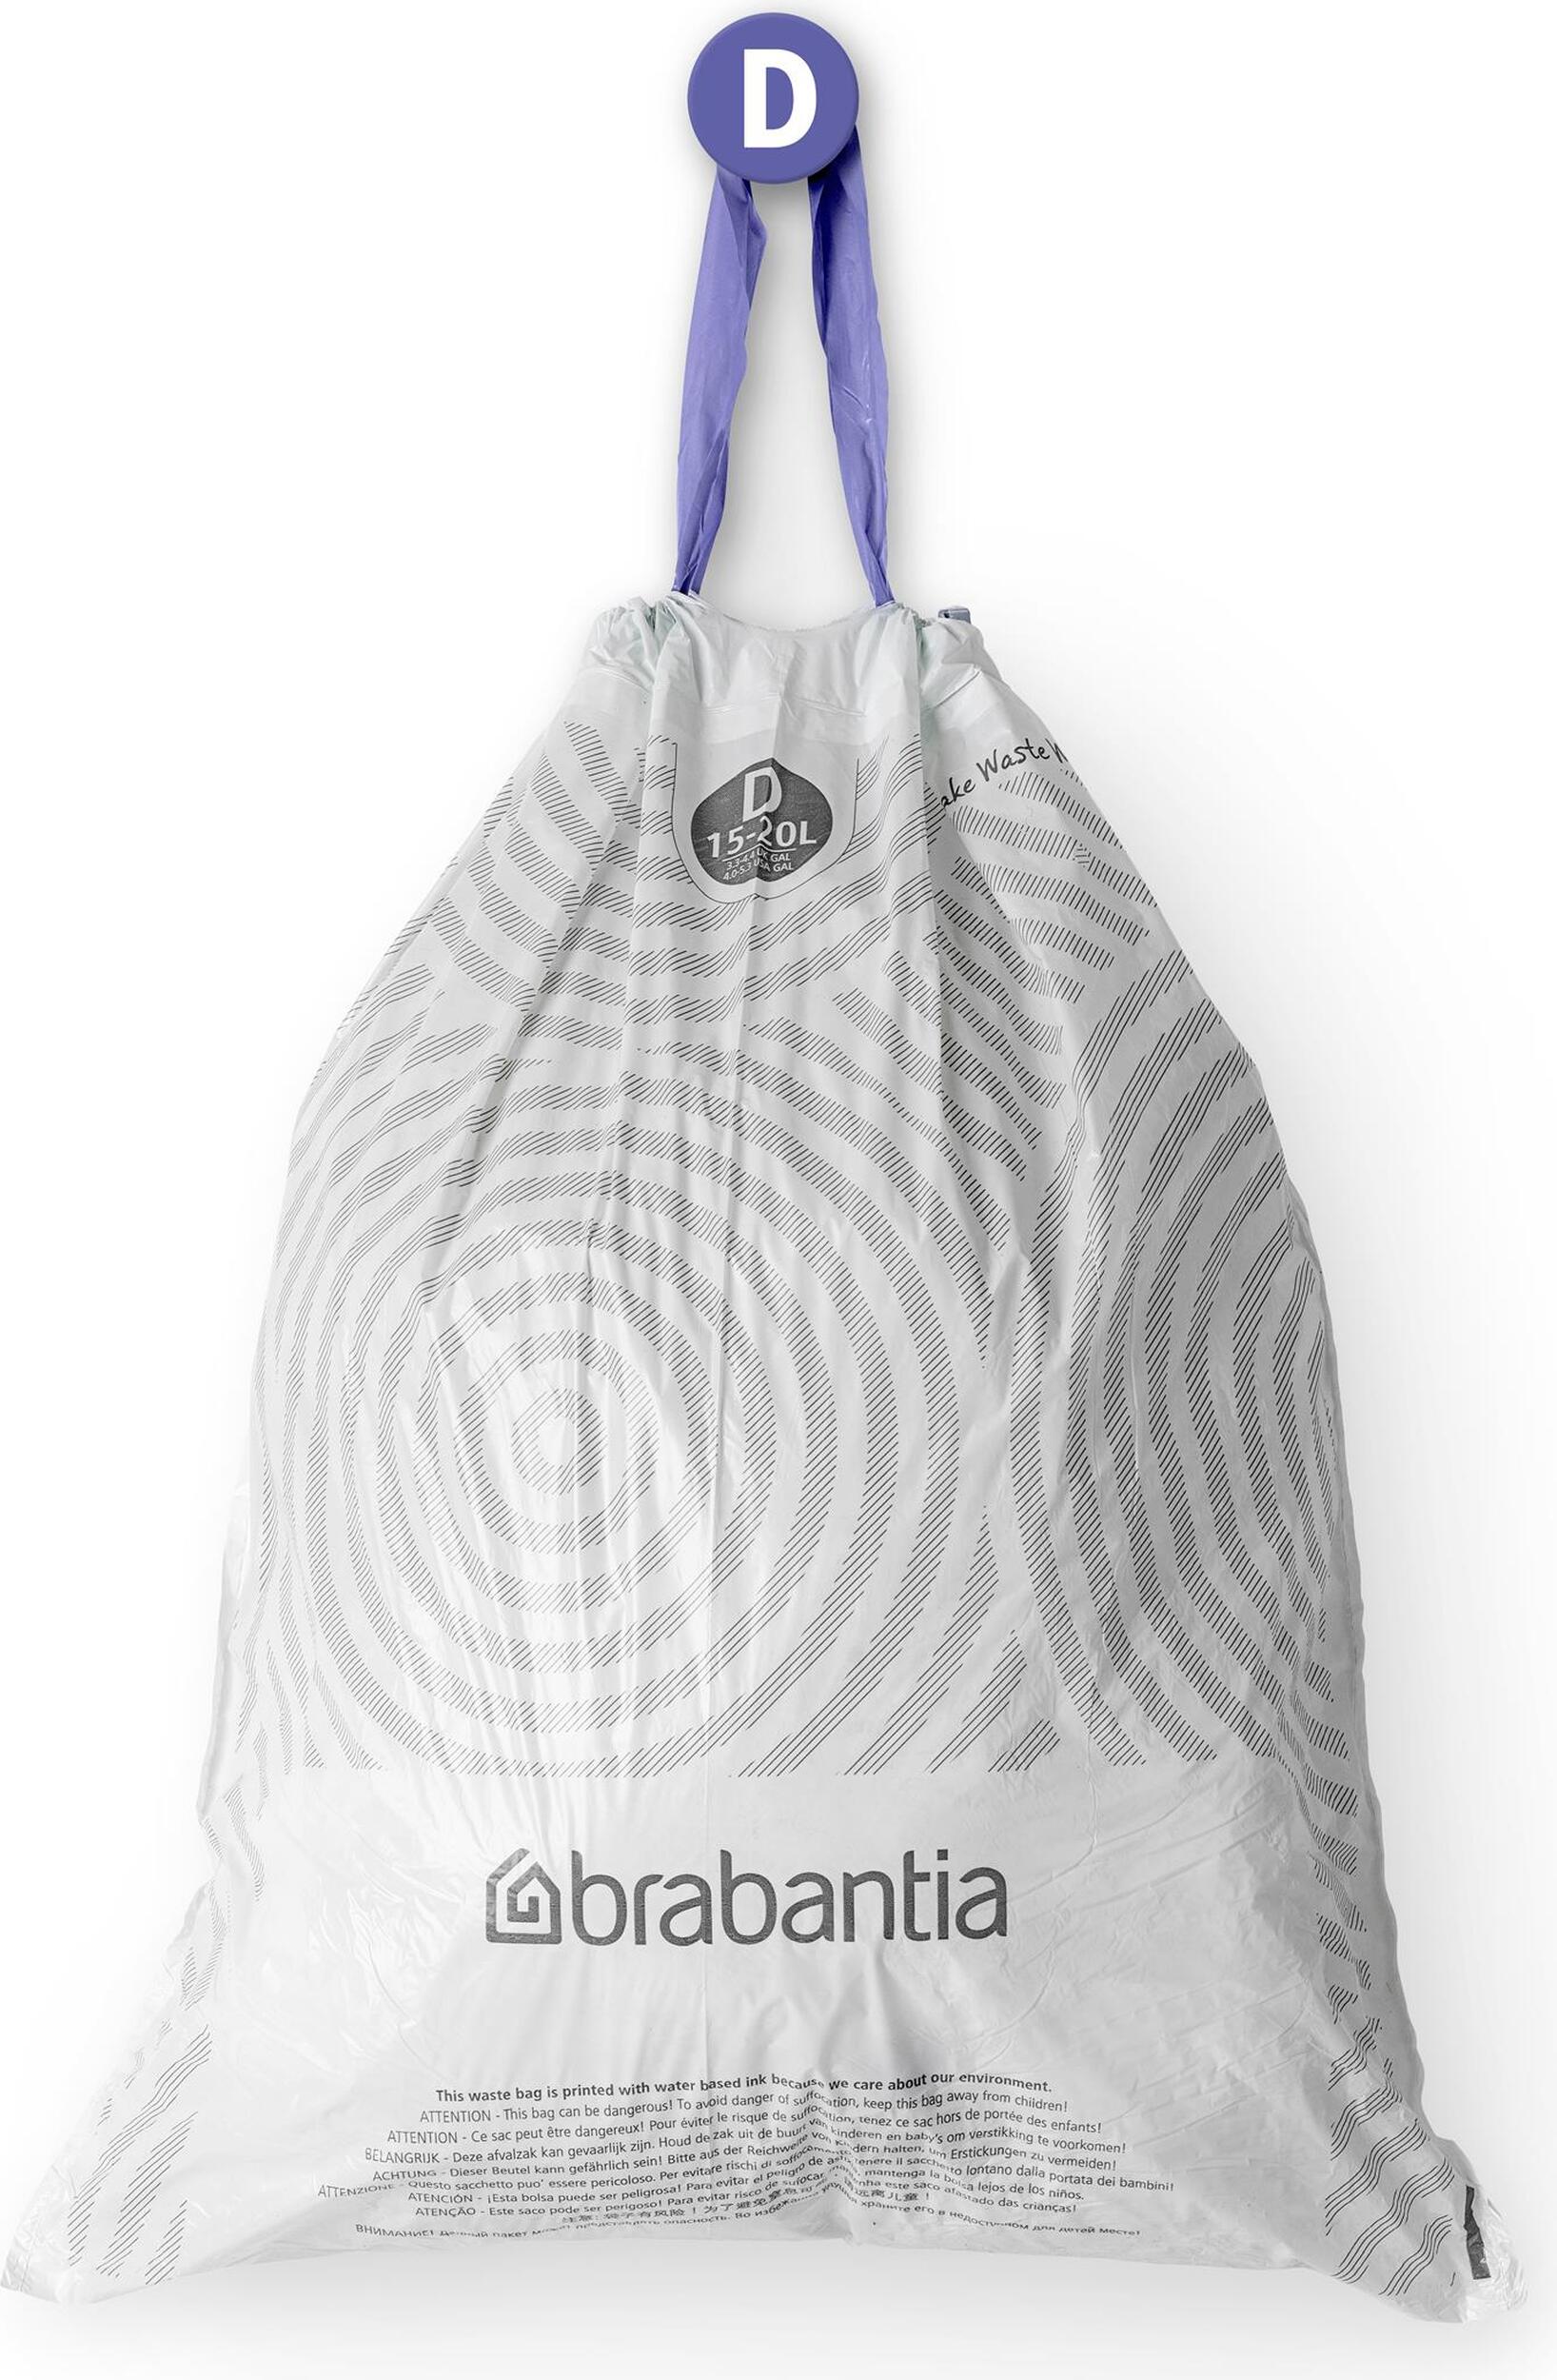 https://3fa-media.com/brabantia/brabantia-brabantia-trash-bags-perfectfit__120625_1151b03-s2500x2500.jpg